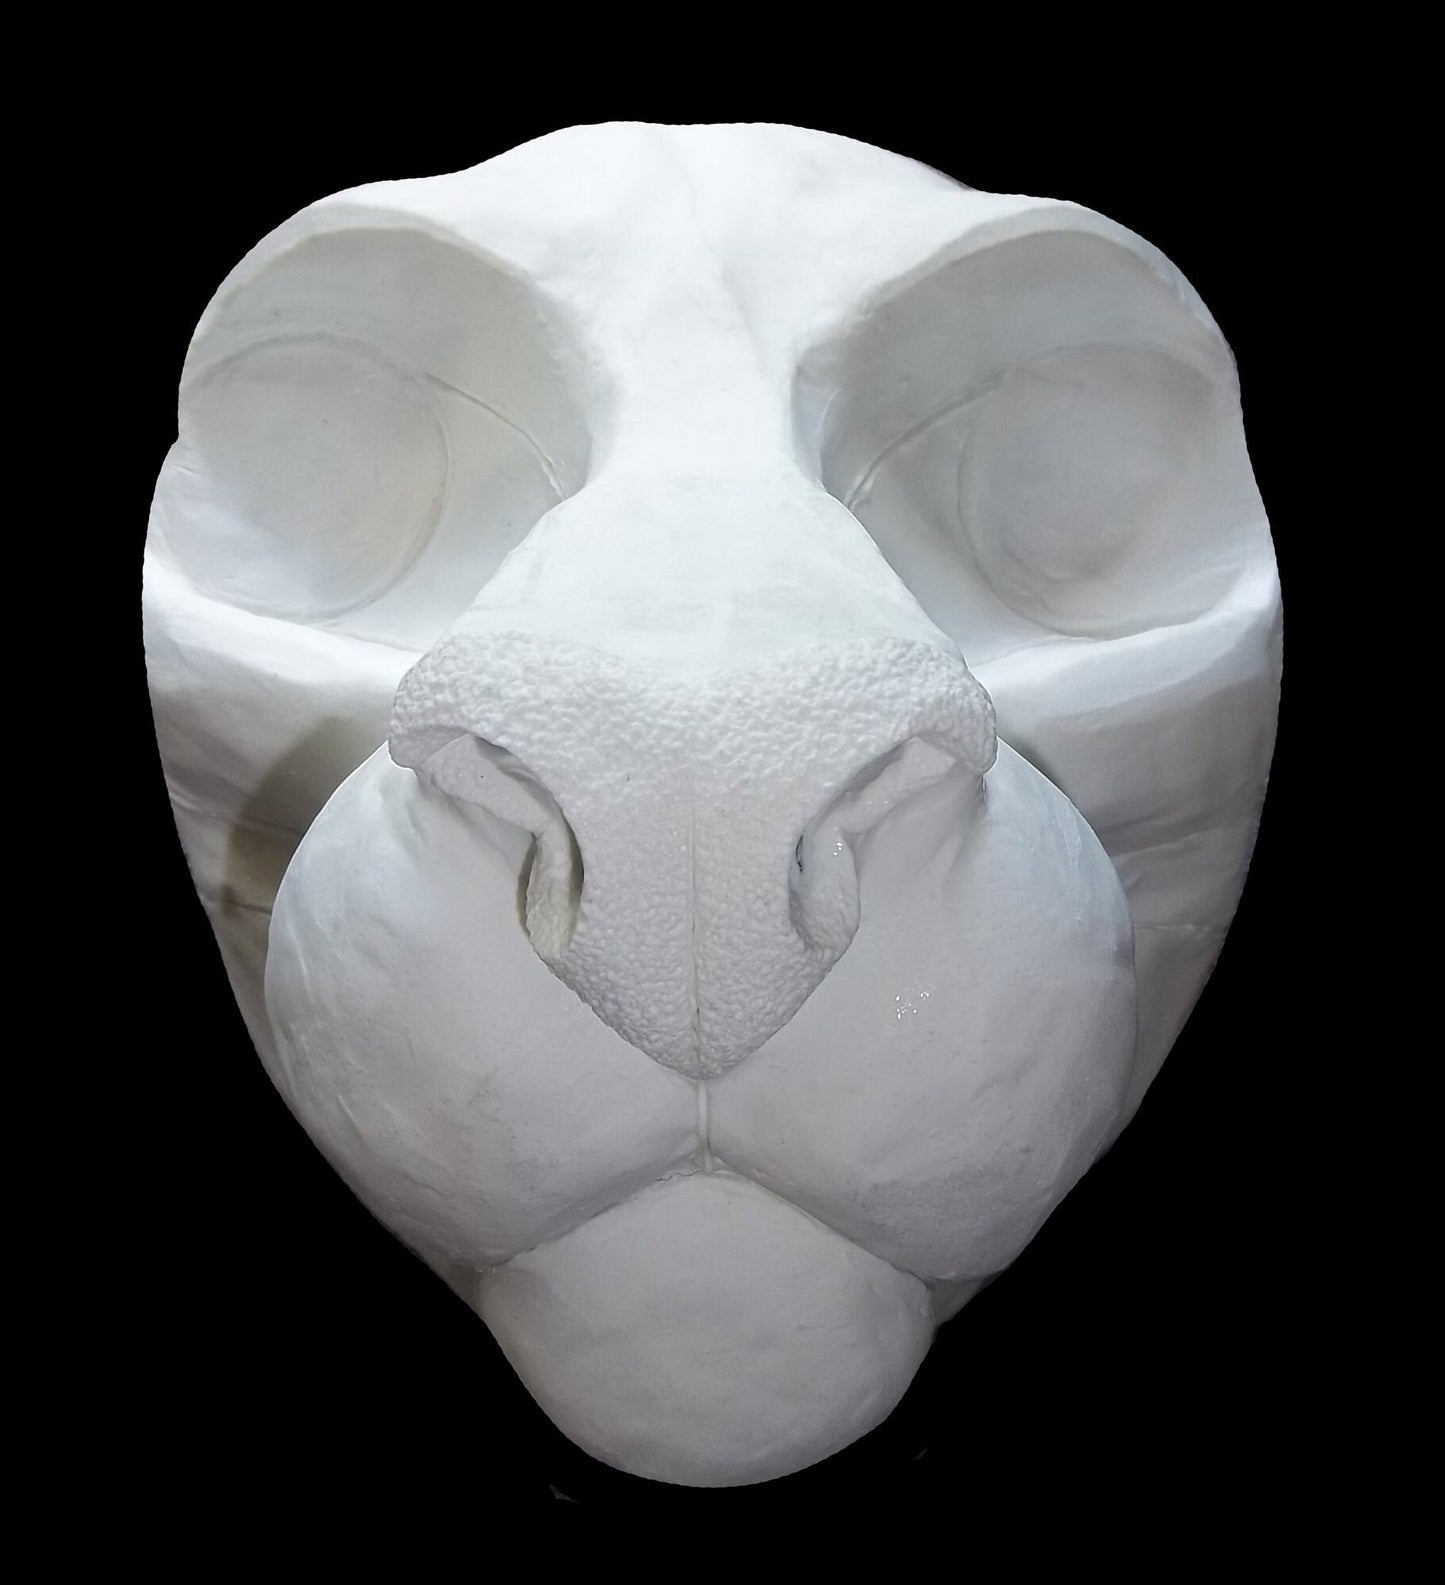 Semi Realistic Feline Mask Blanks (Jawset available), Fursuit Head Base Costume Mask Larp Fest